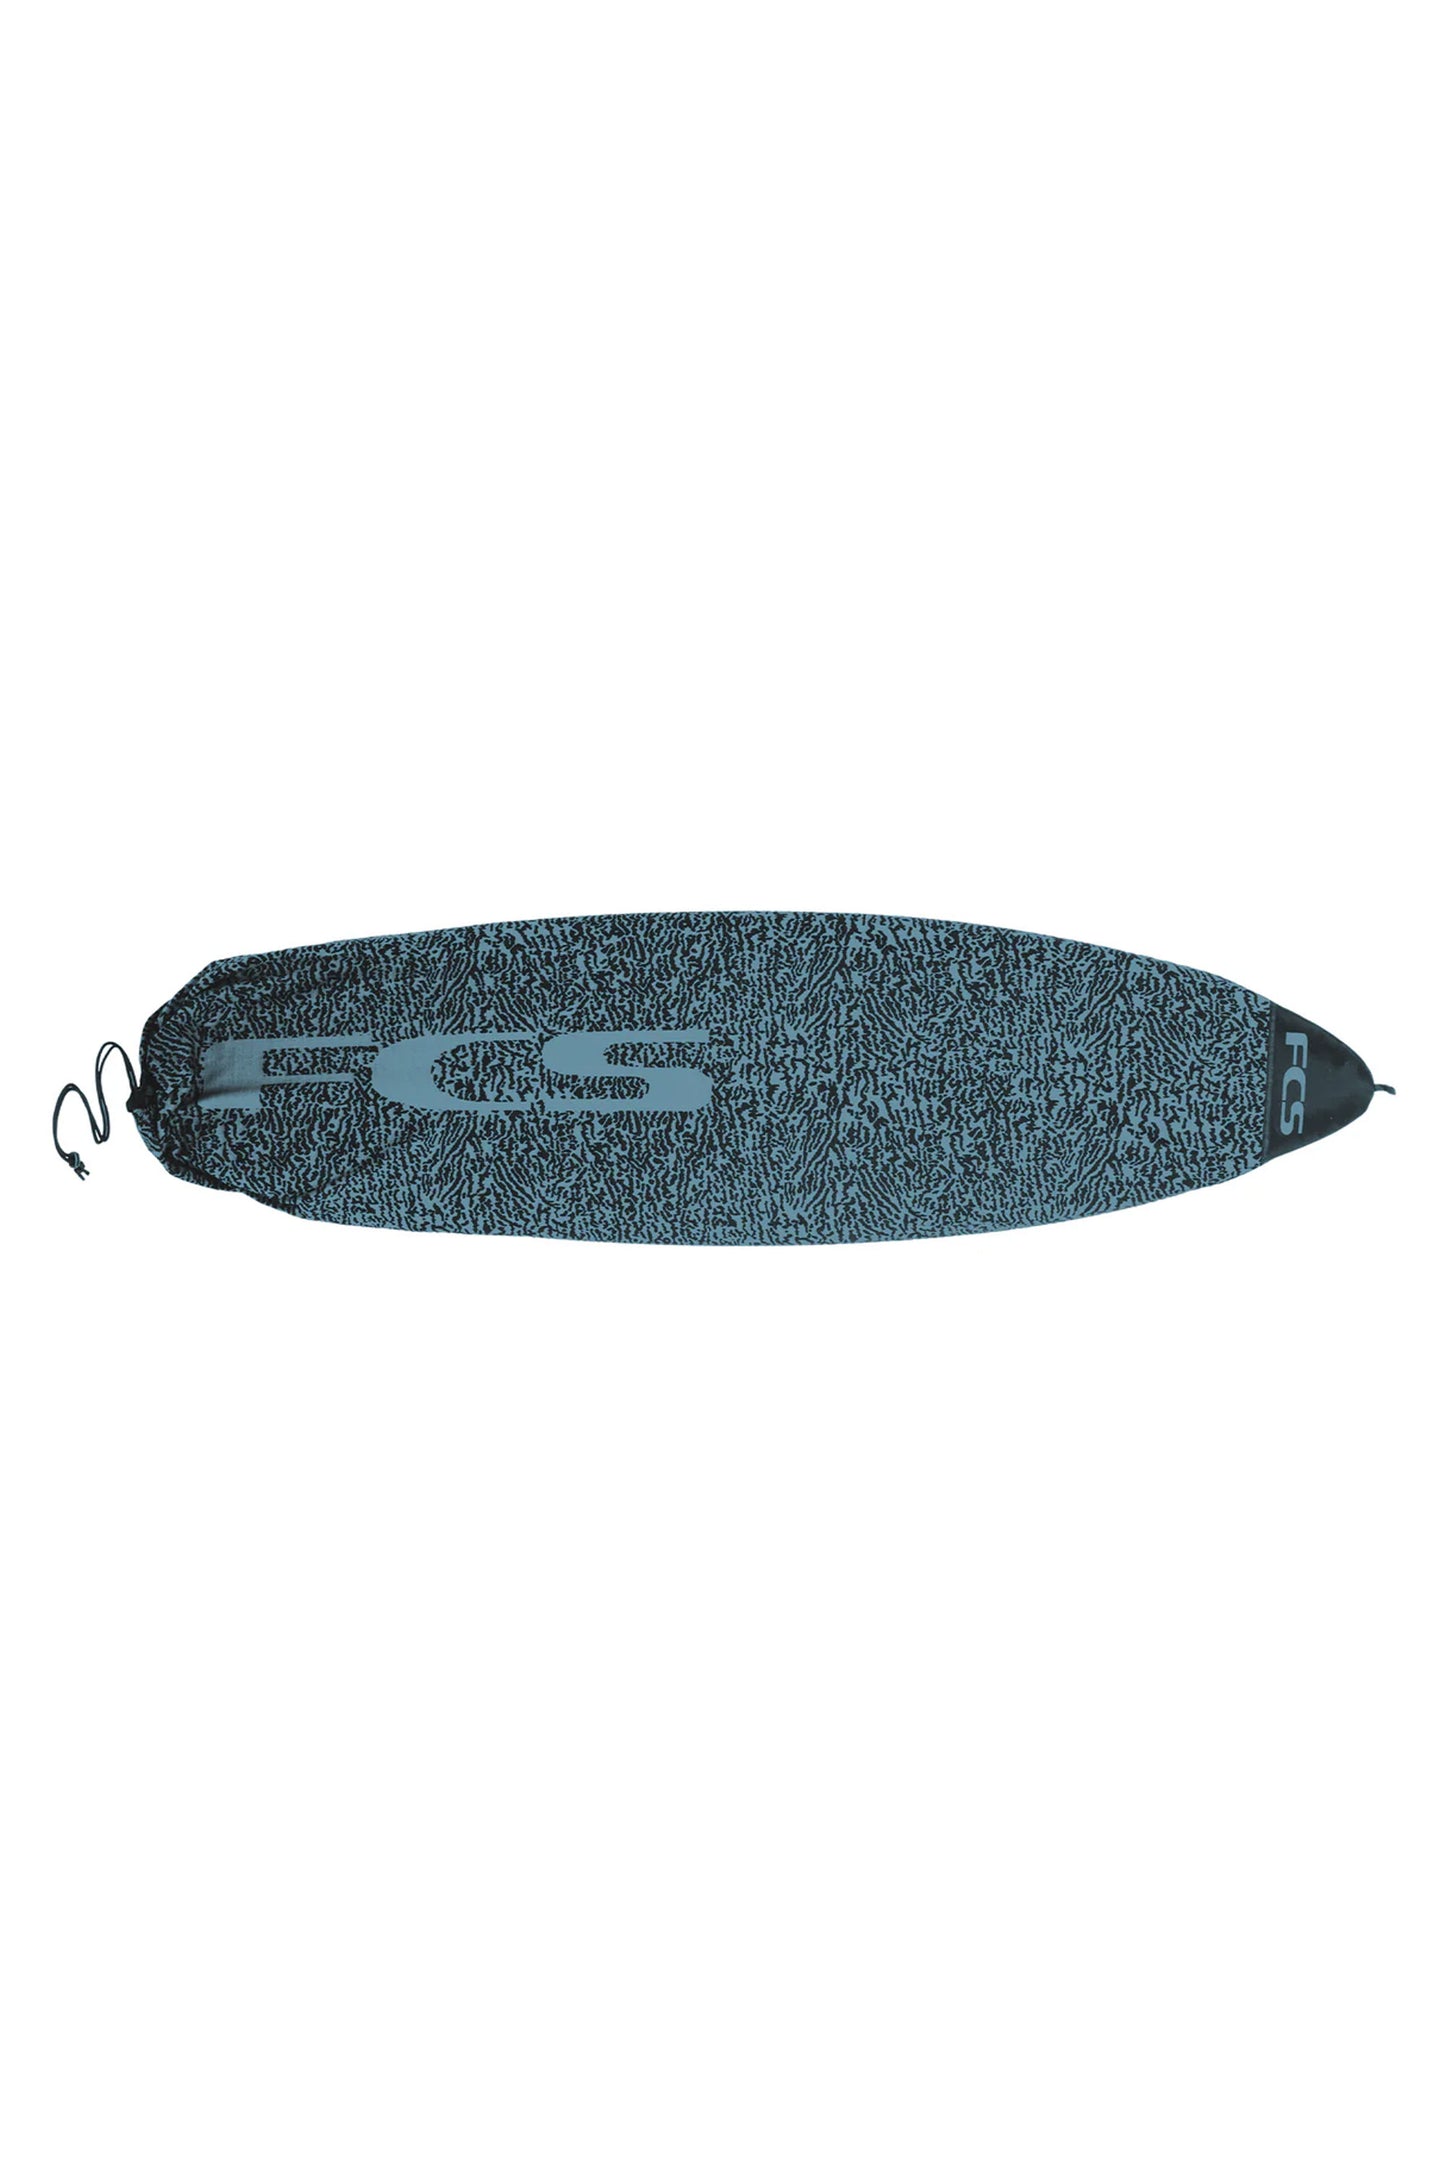 Pukas-Surf-Shop-fcs-stretch-all-purpose-cover-tranquil-blue